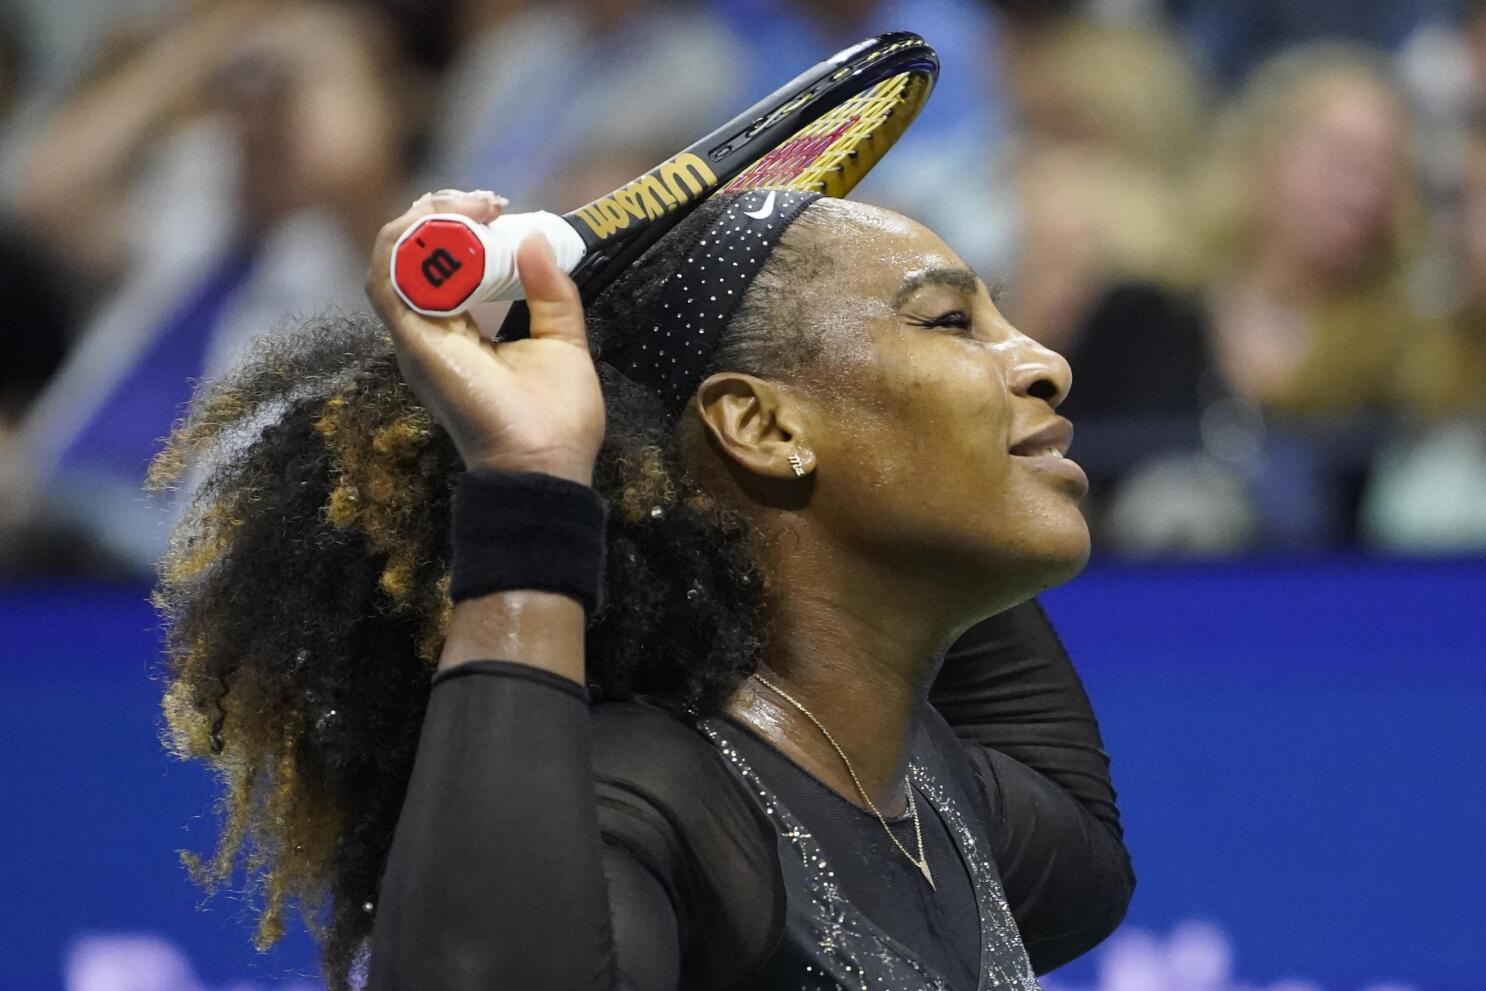 Serena Williams breaks record with 23rd Grand Slam